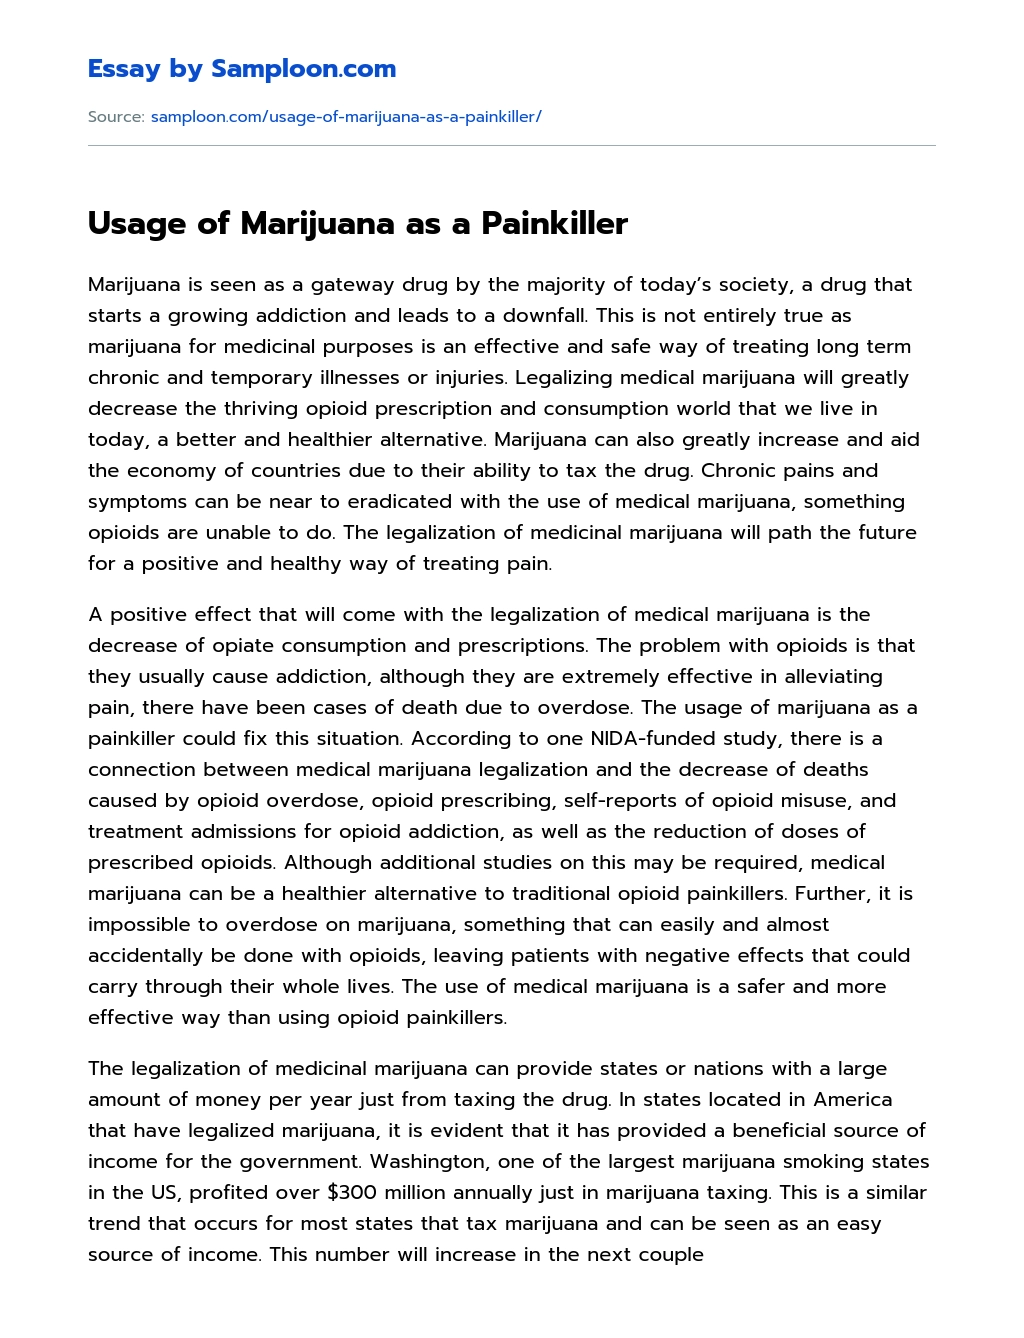 Usage of Marijuana as a Painkiller essay